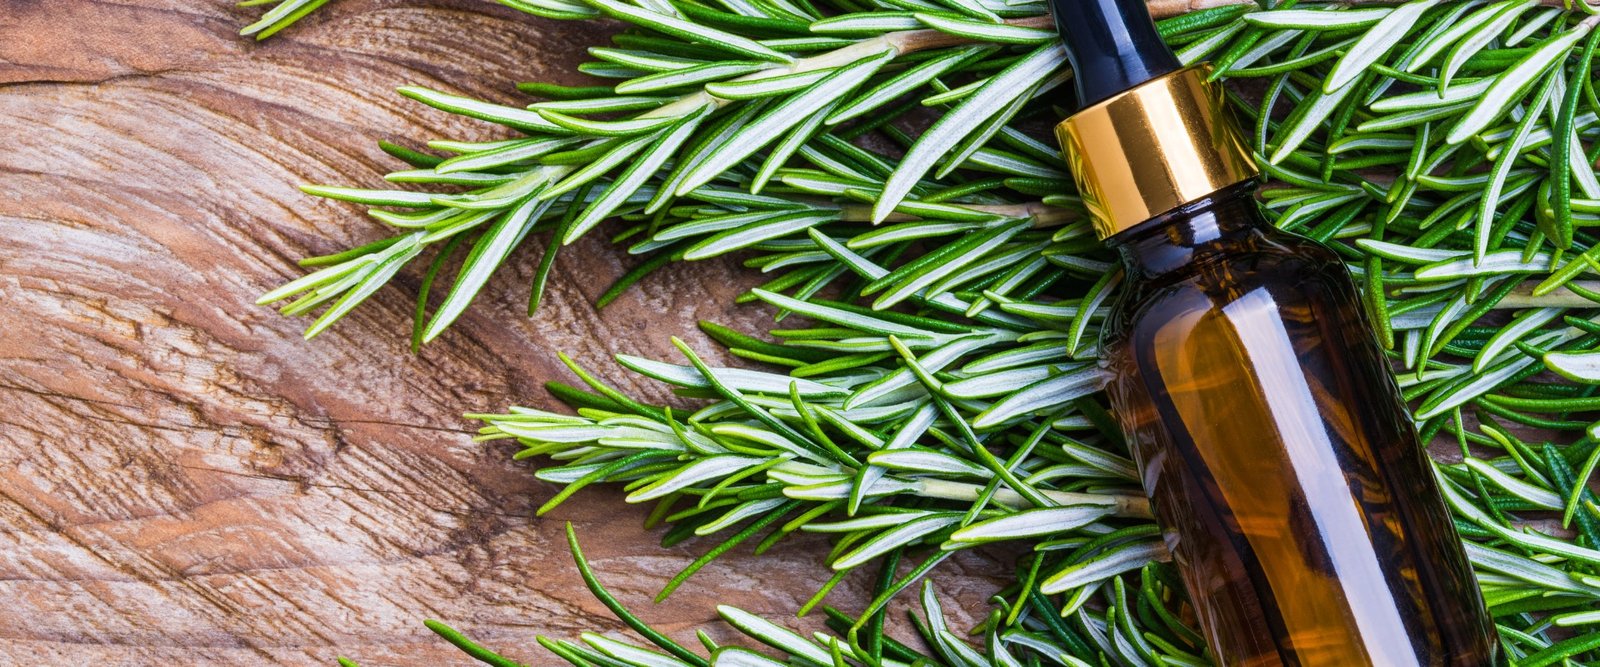 Is Rosemary Oil Good For Beard Growth